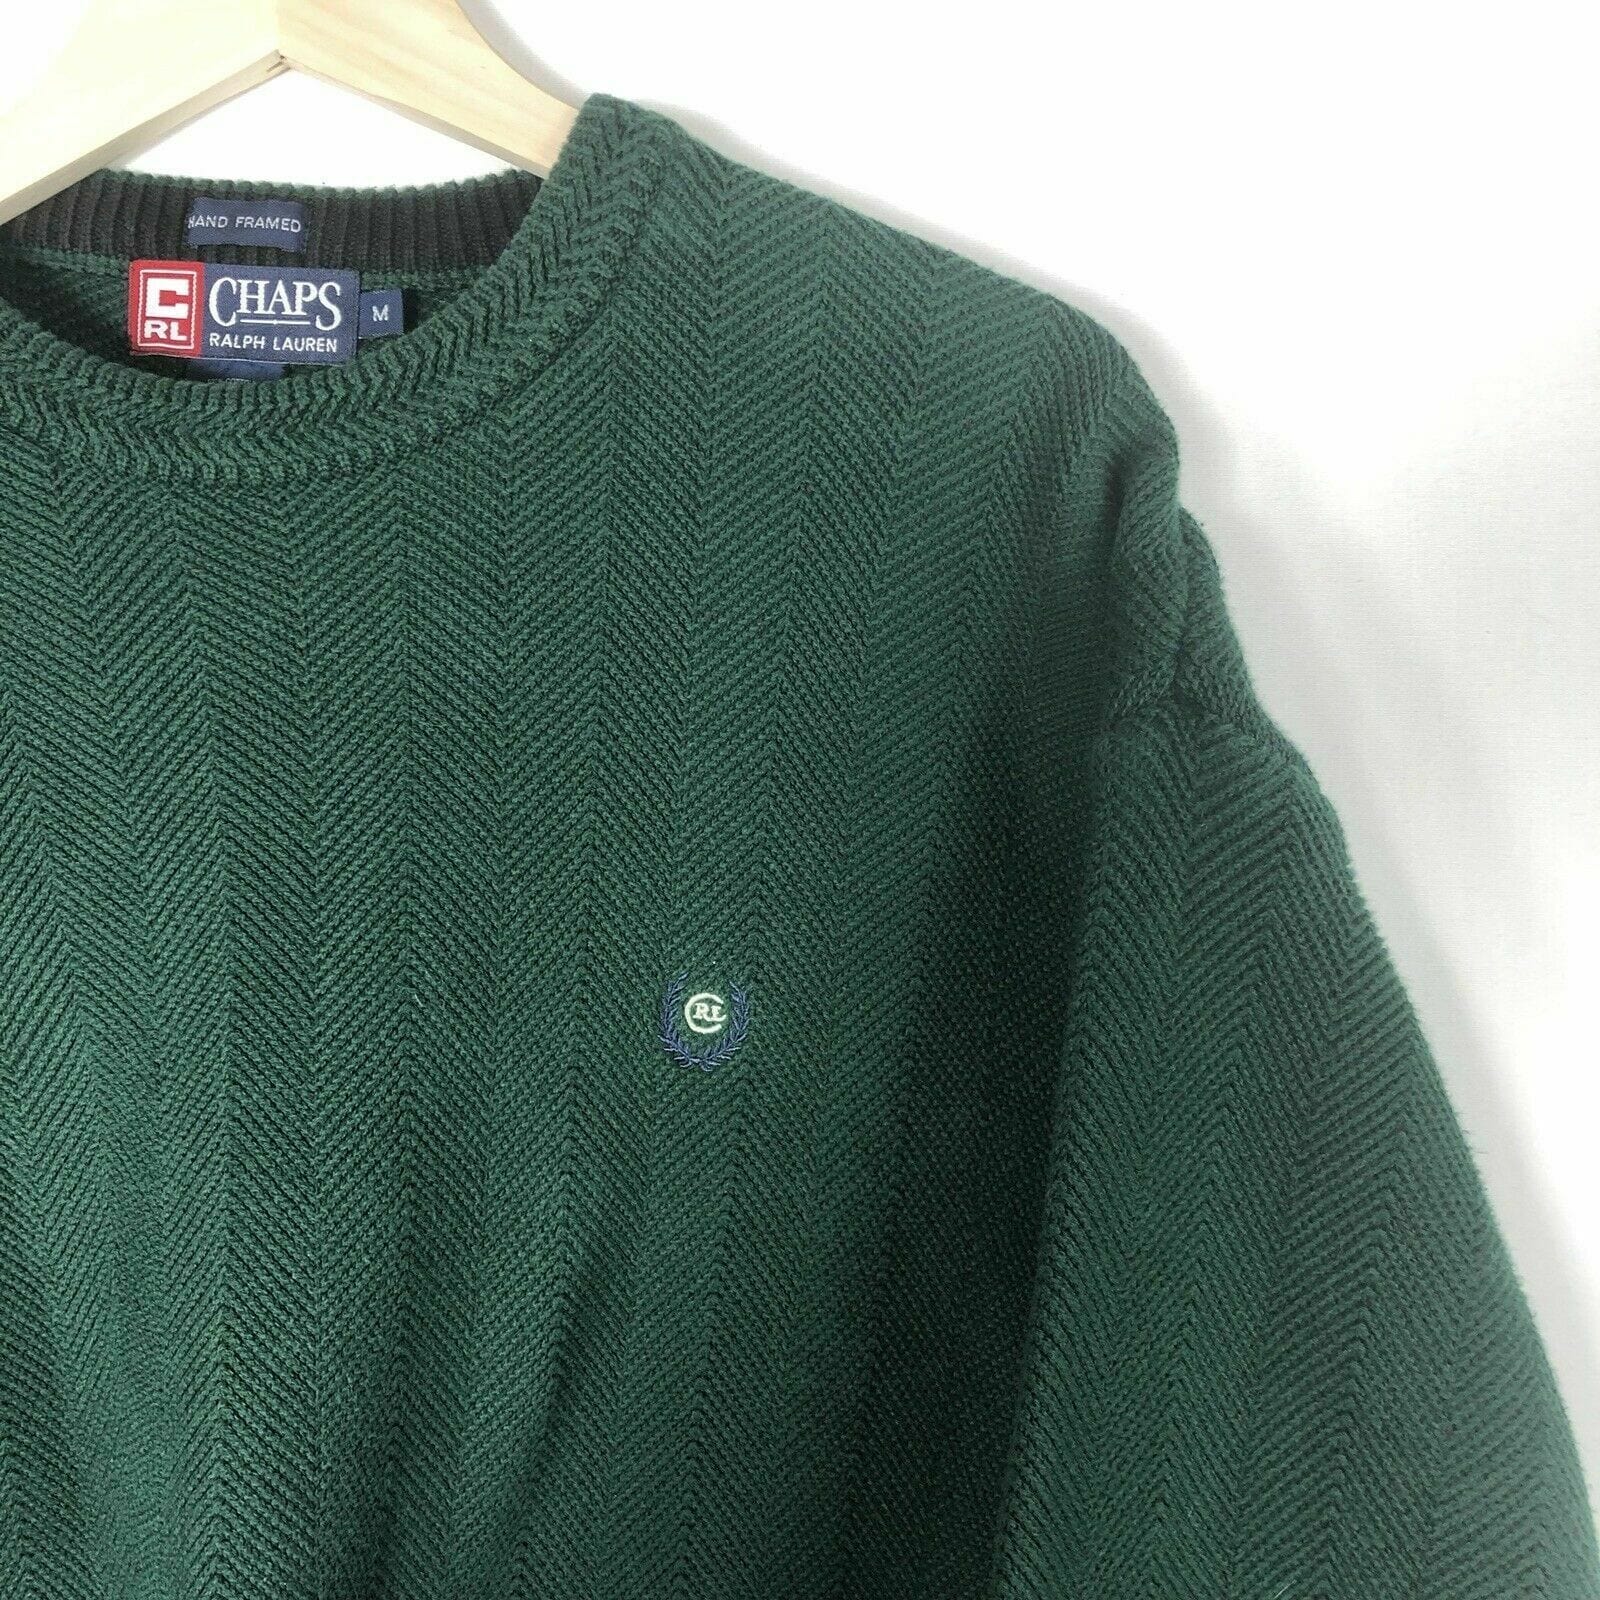 Chaps Ralph Lauren Mens Pullover Knit Crewneck Sweater, Dark Green - Size M - parsimonyshoppes